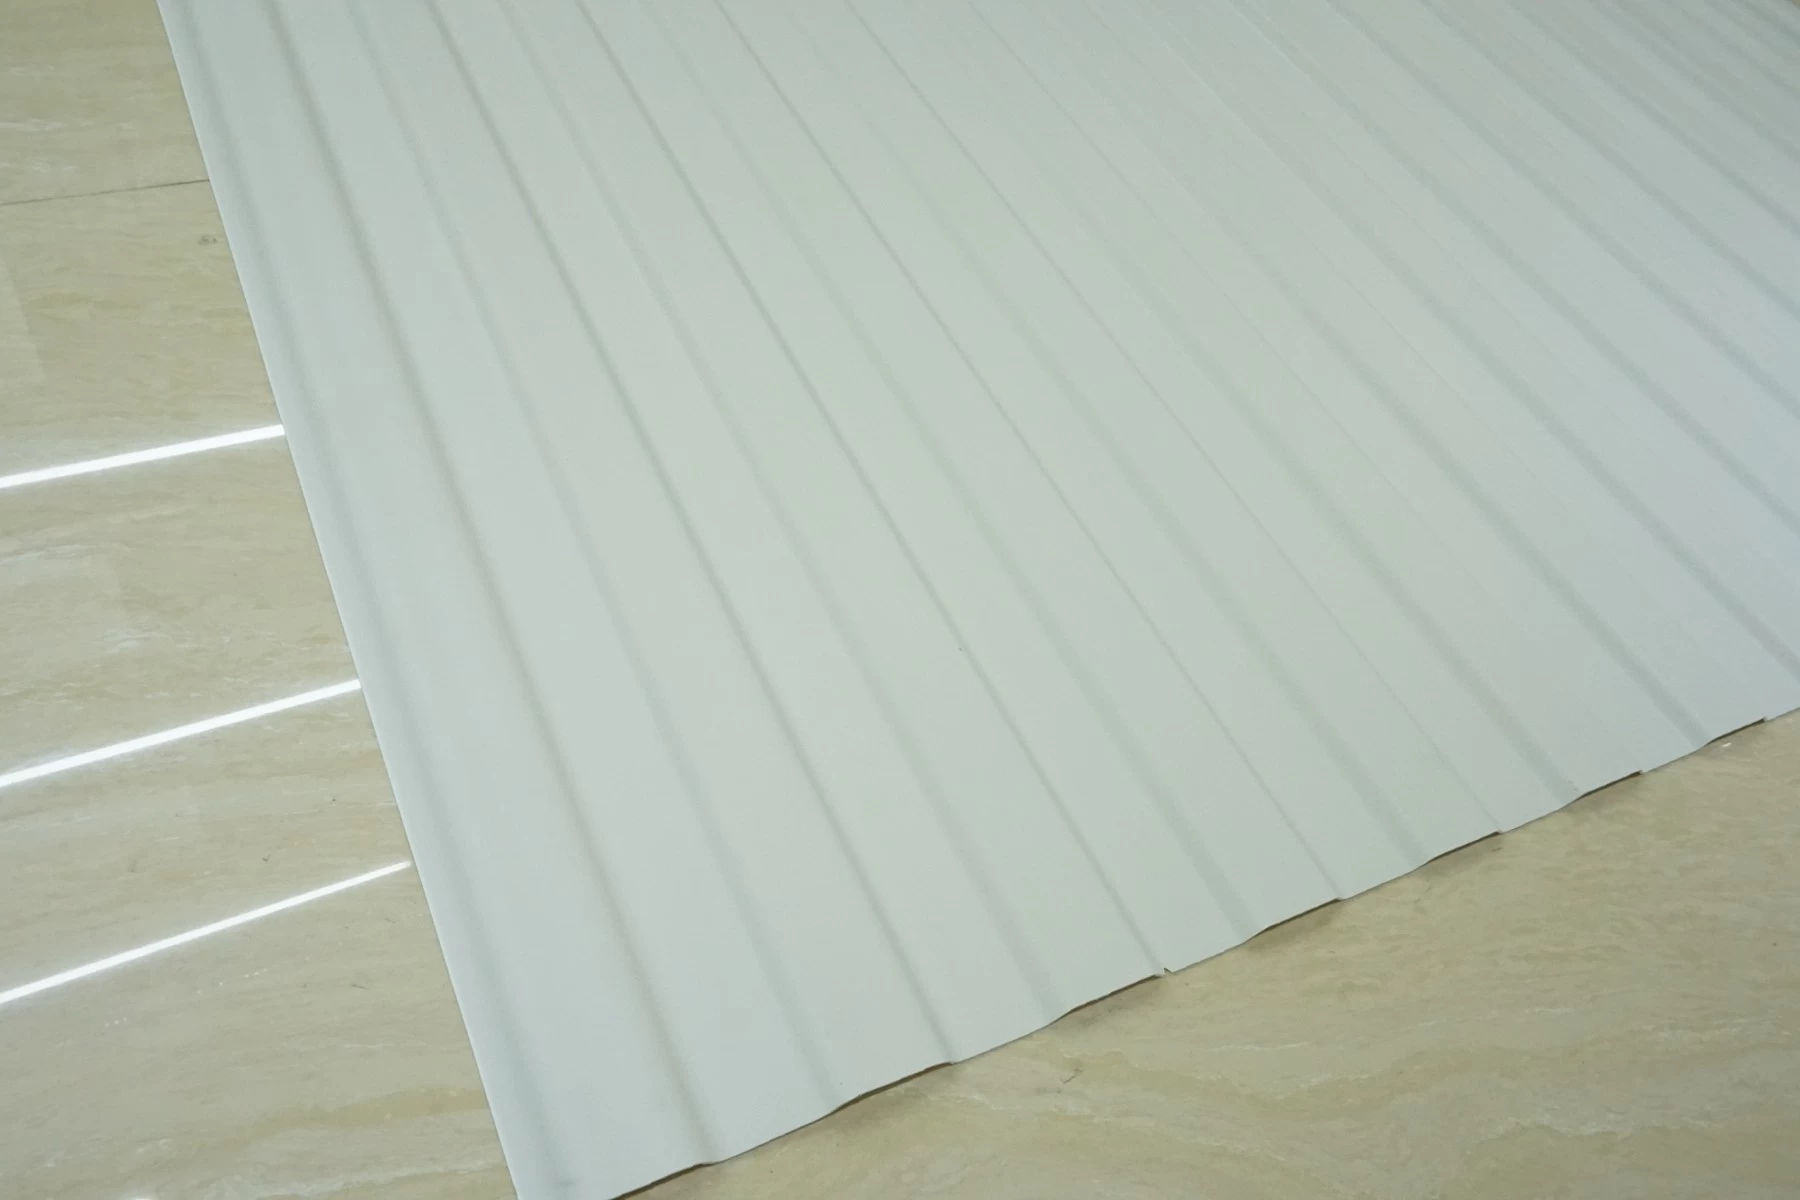 ZXC الصين المورد ورقة الحائط البلاستيكية البلاستيكية خفيفة الوزن لتسقيف المنزل